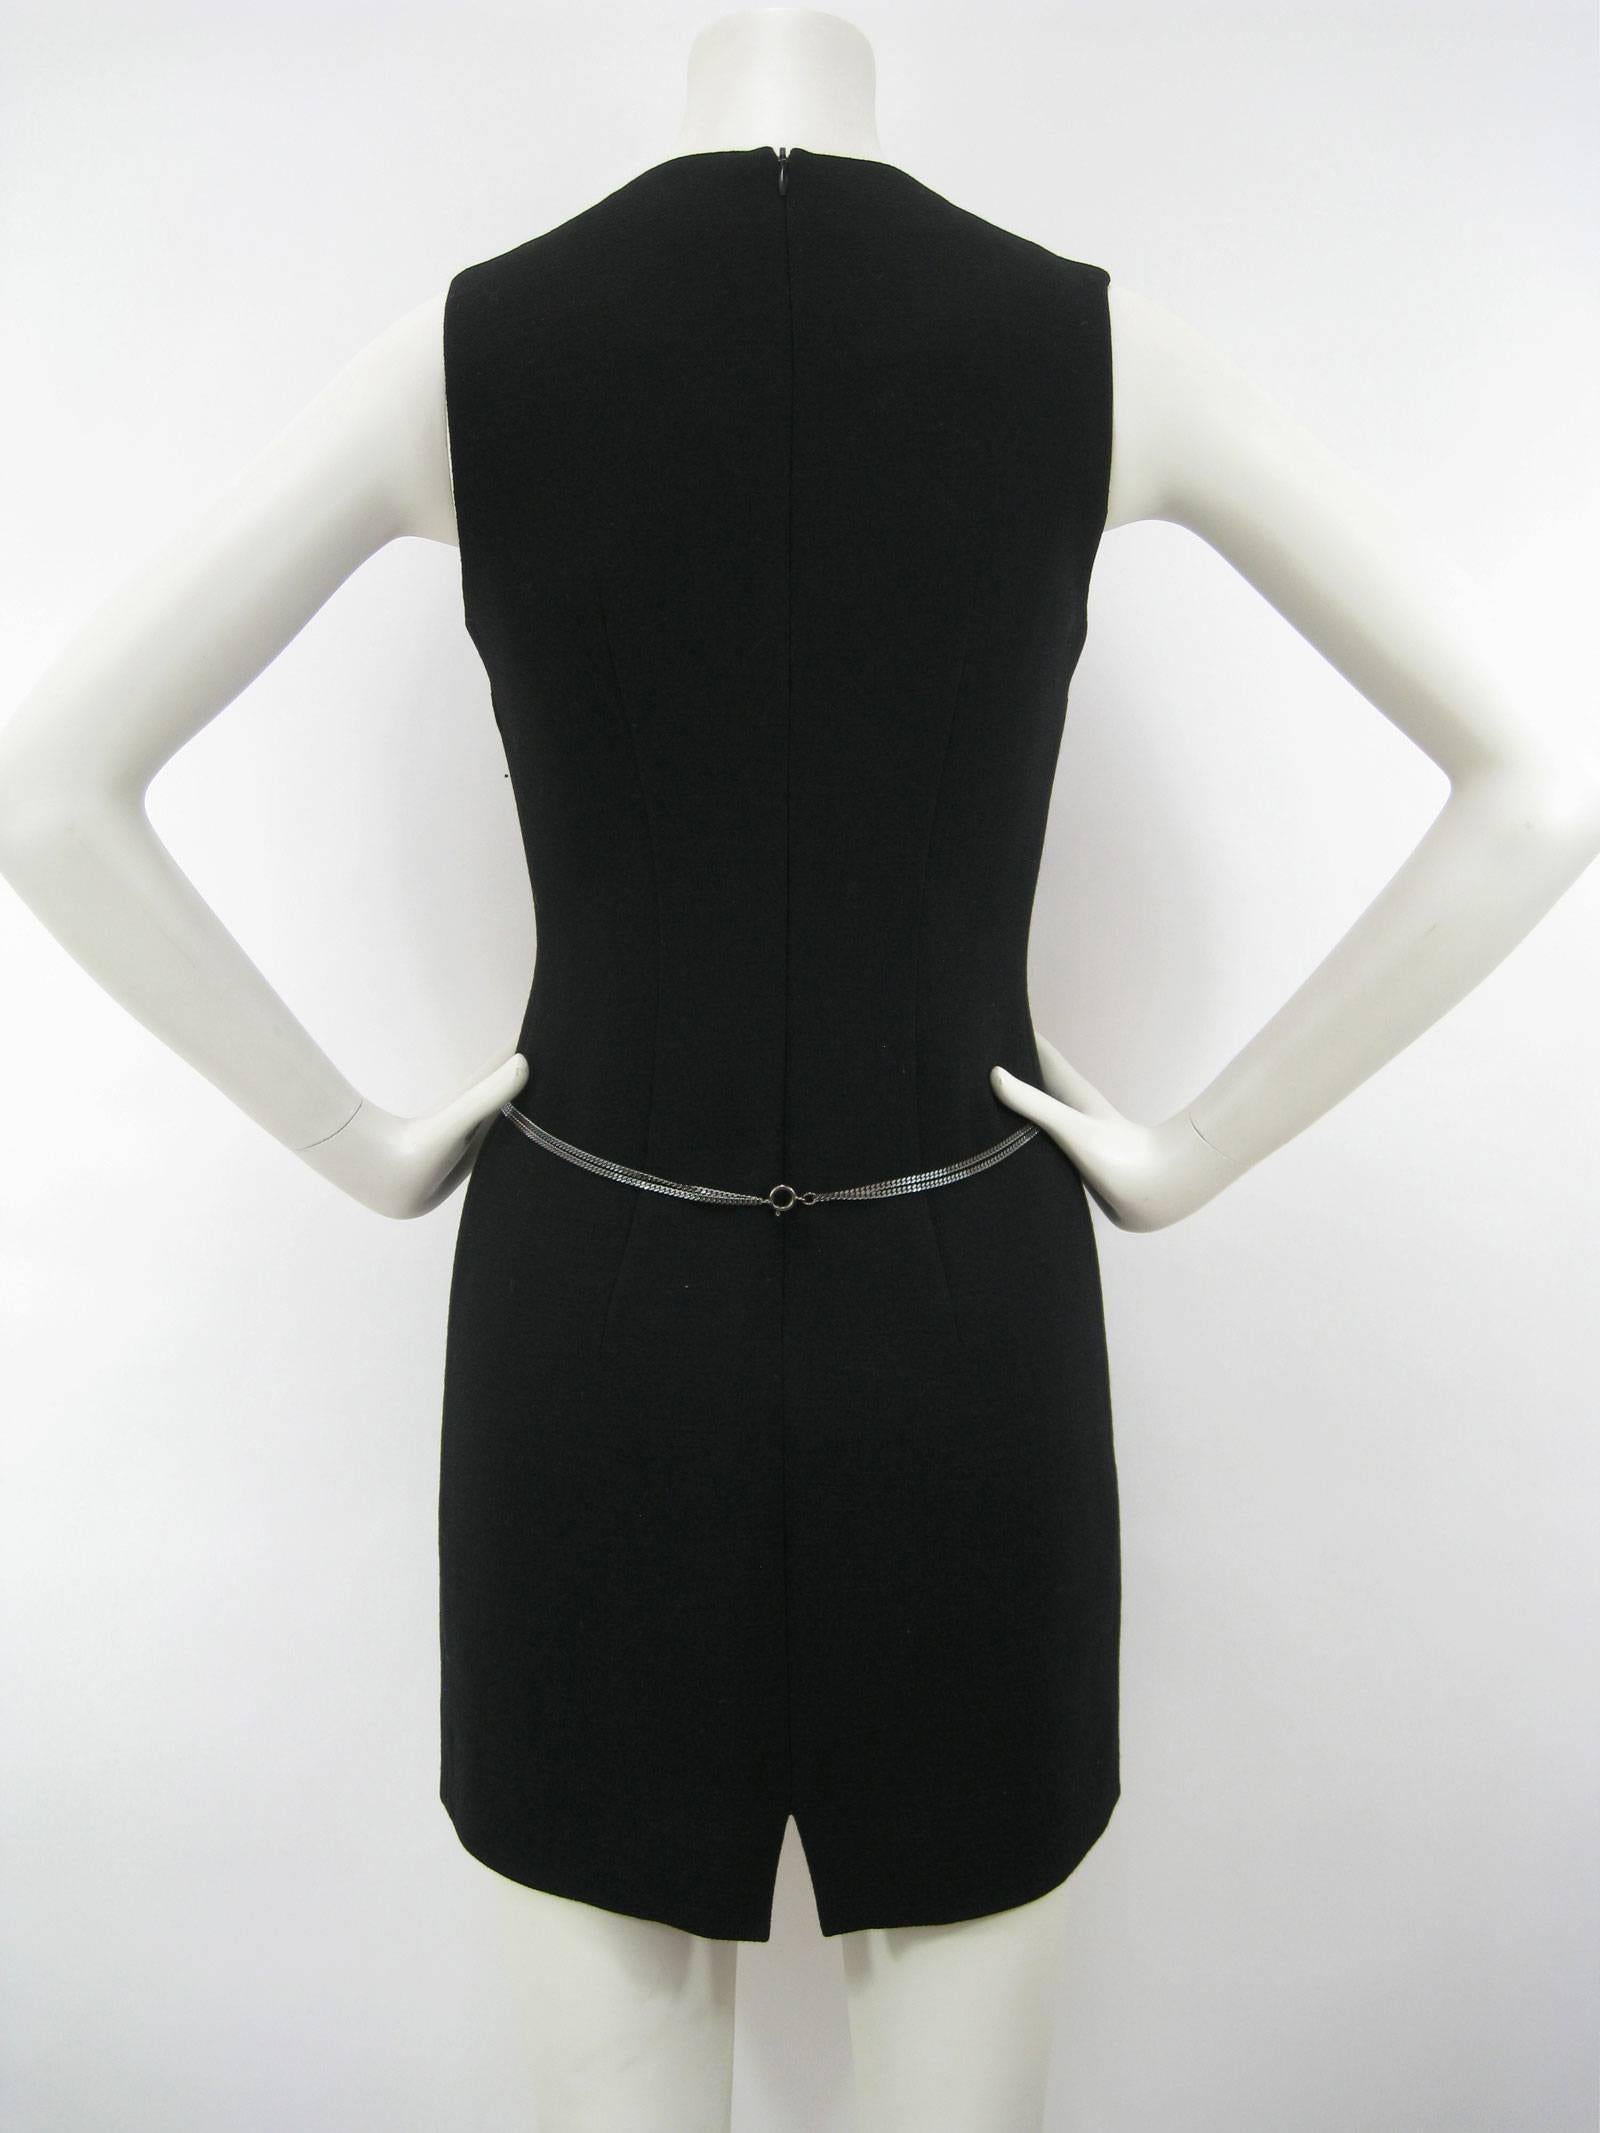 Women's Moschino Cheap & Chic Black Chain & Ring Dress Suit